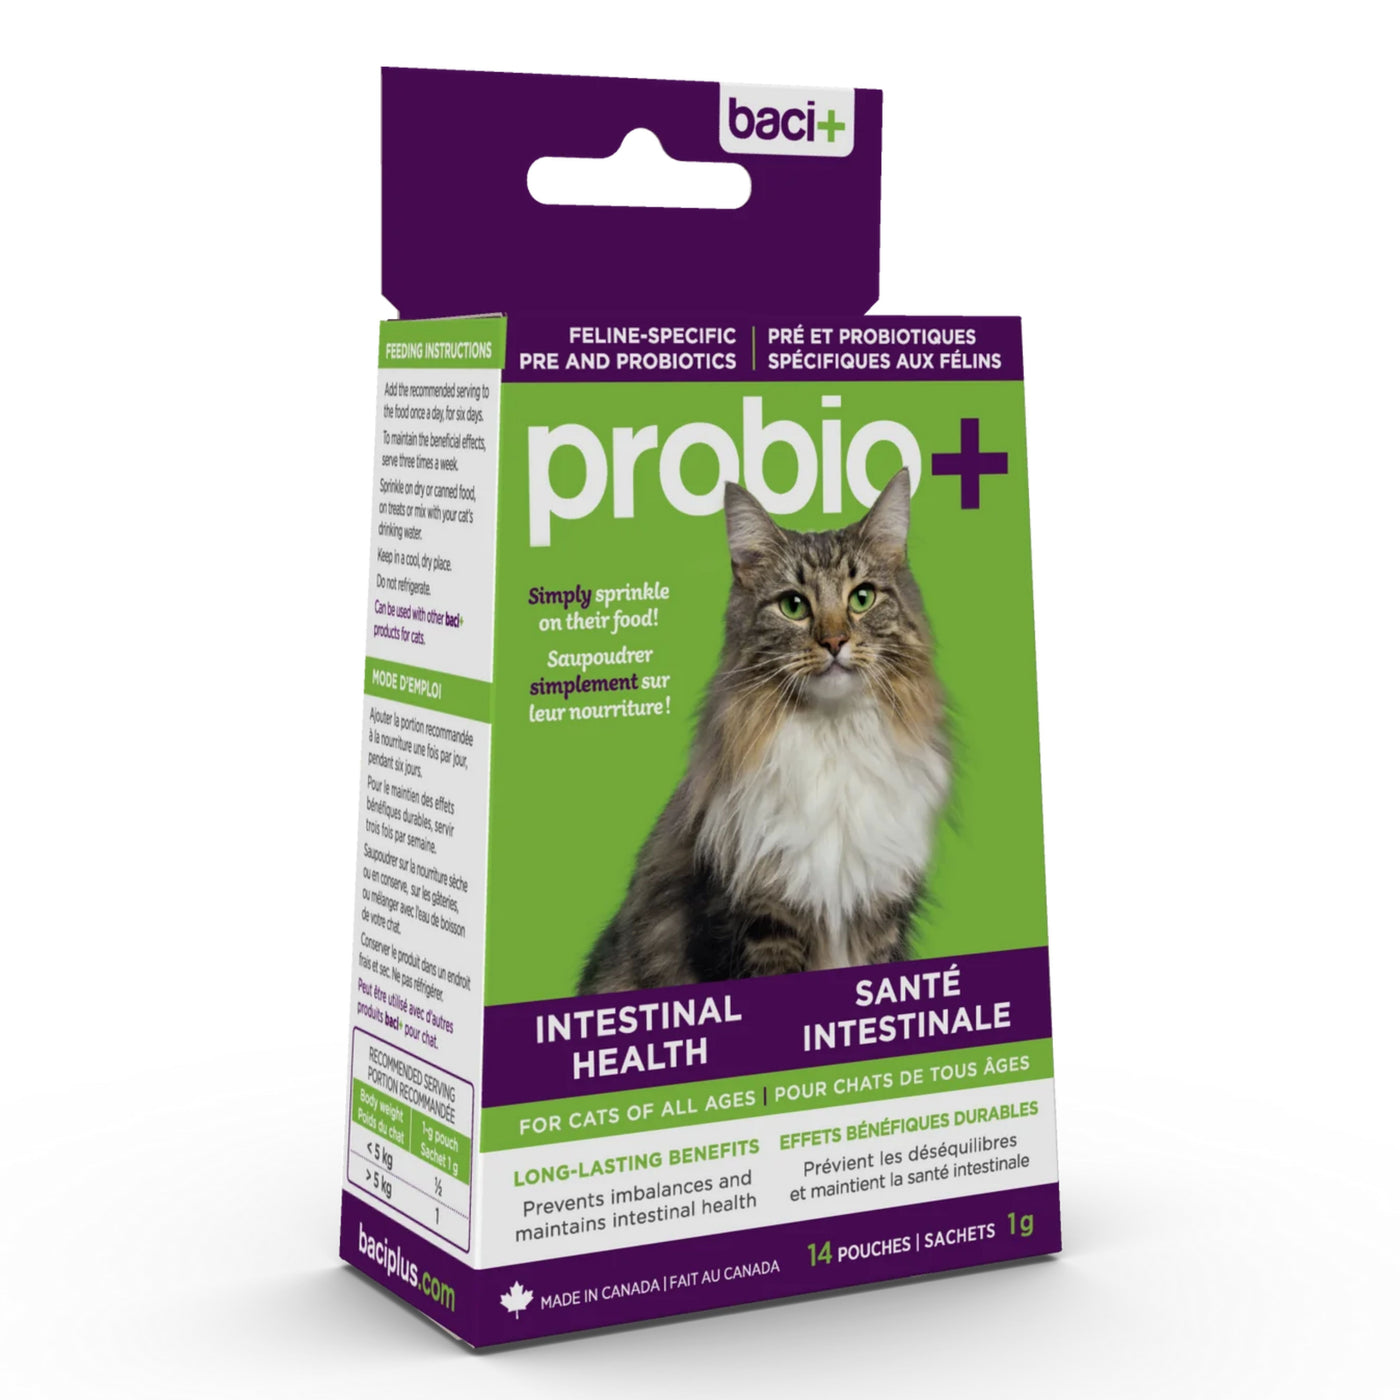 Baci+ Probio+ Pre and probiotics • Promotes and maintains a healthy intestinal flora | Cats